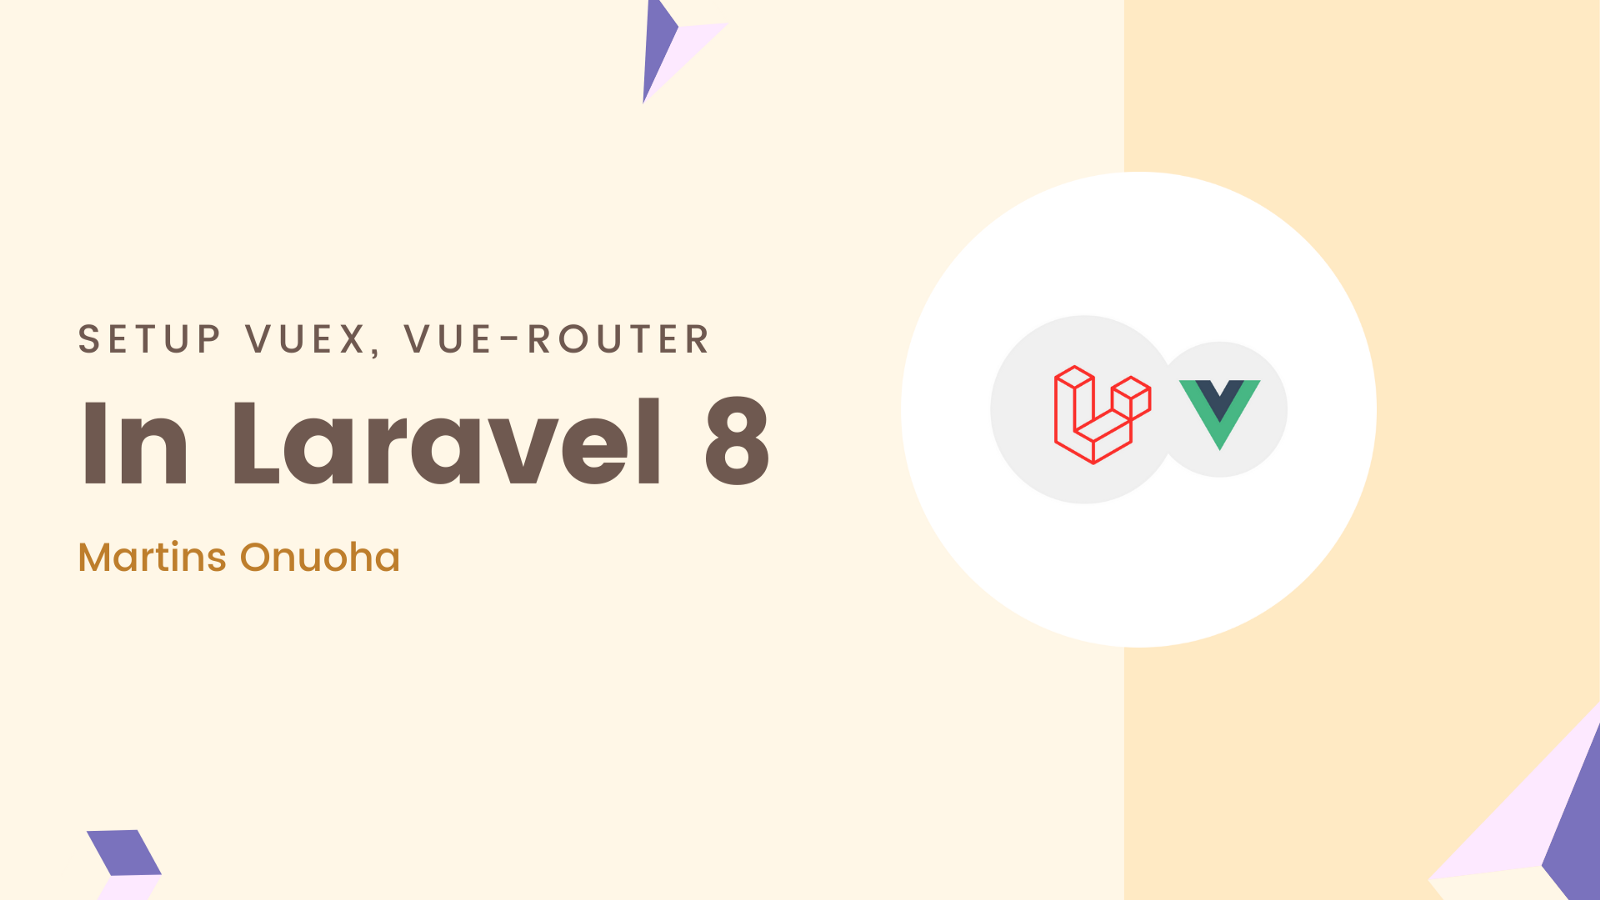 Set up Vue, Vuex, Vue-Router & Sass in Laravel 8